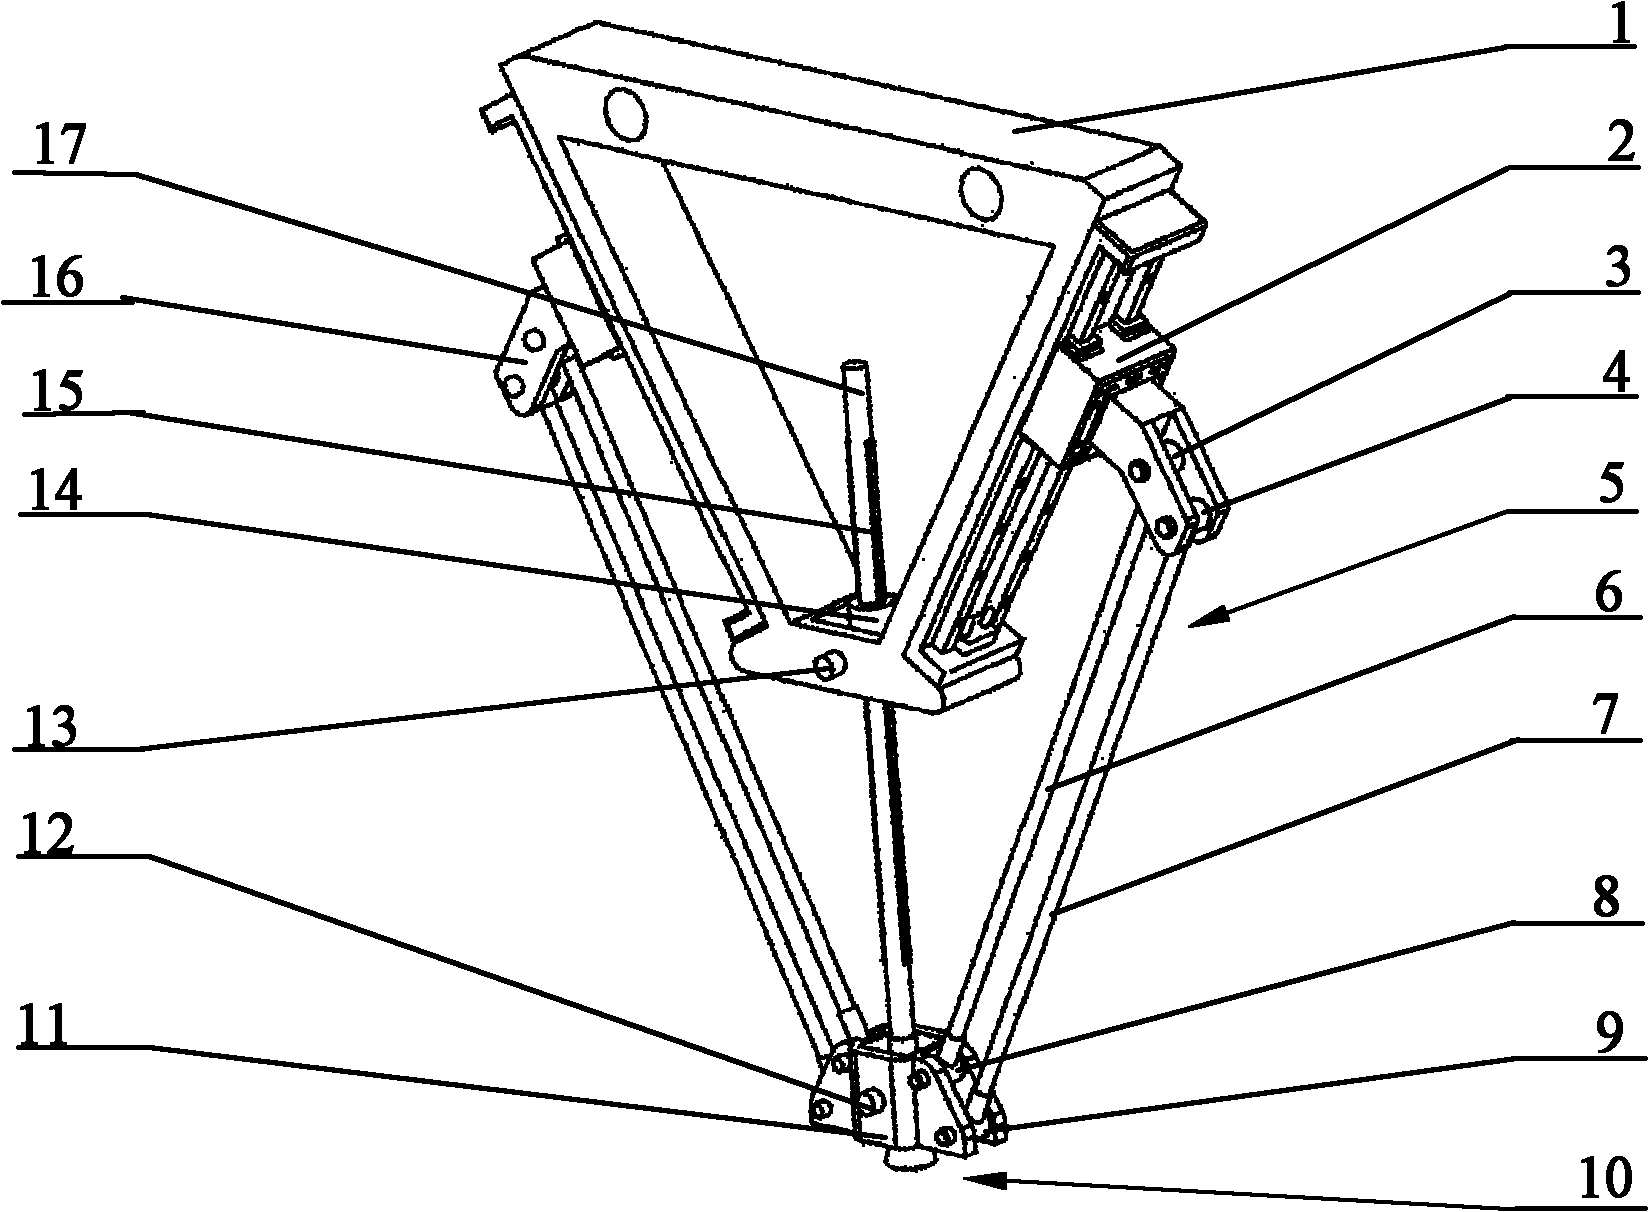 Linear-driven high-speed planar parallel mechanical arm